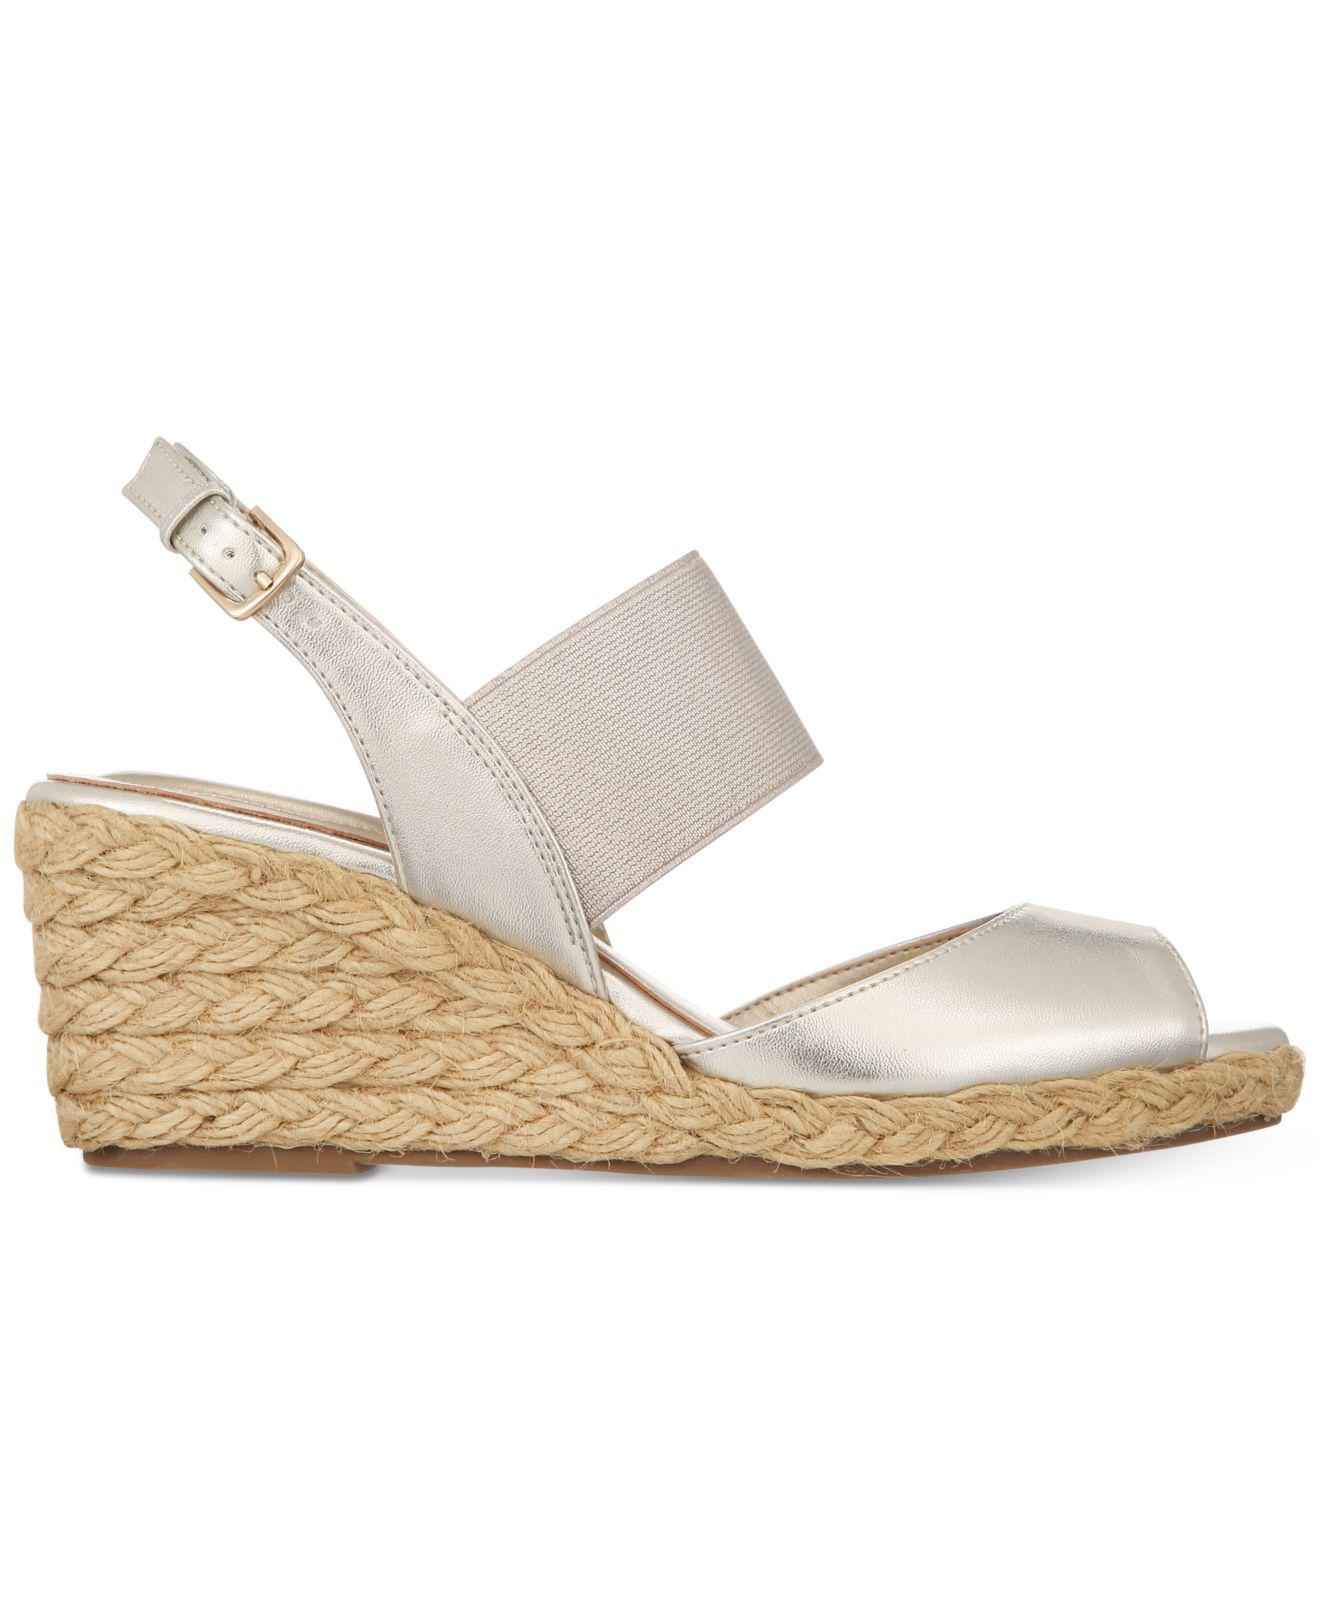 Bandolino Himeka Espadrille Wedge Sandals, Created For Macy's in Light ...